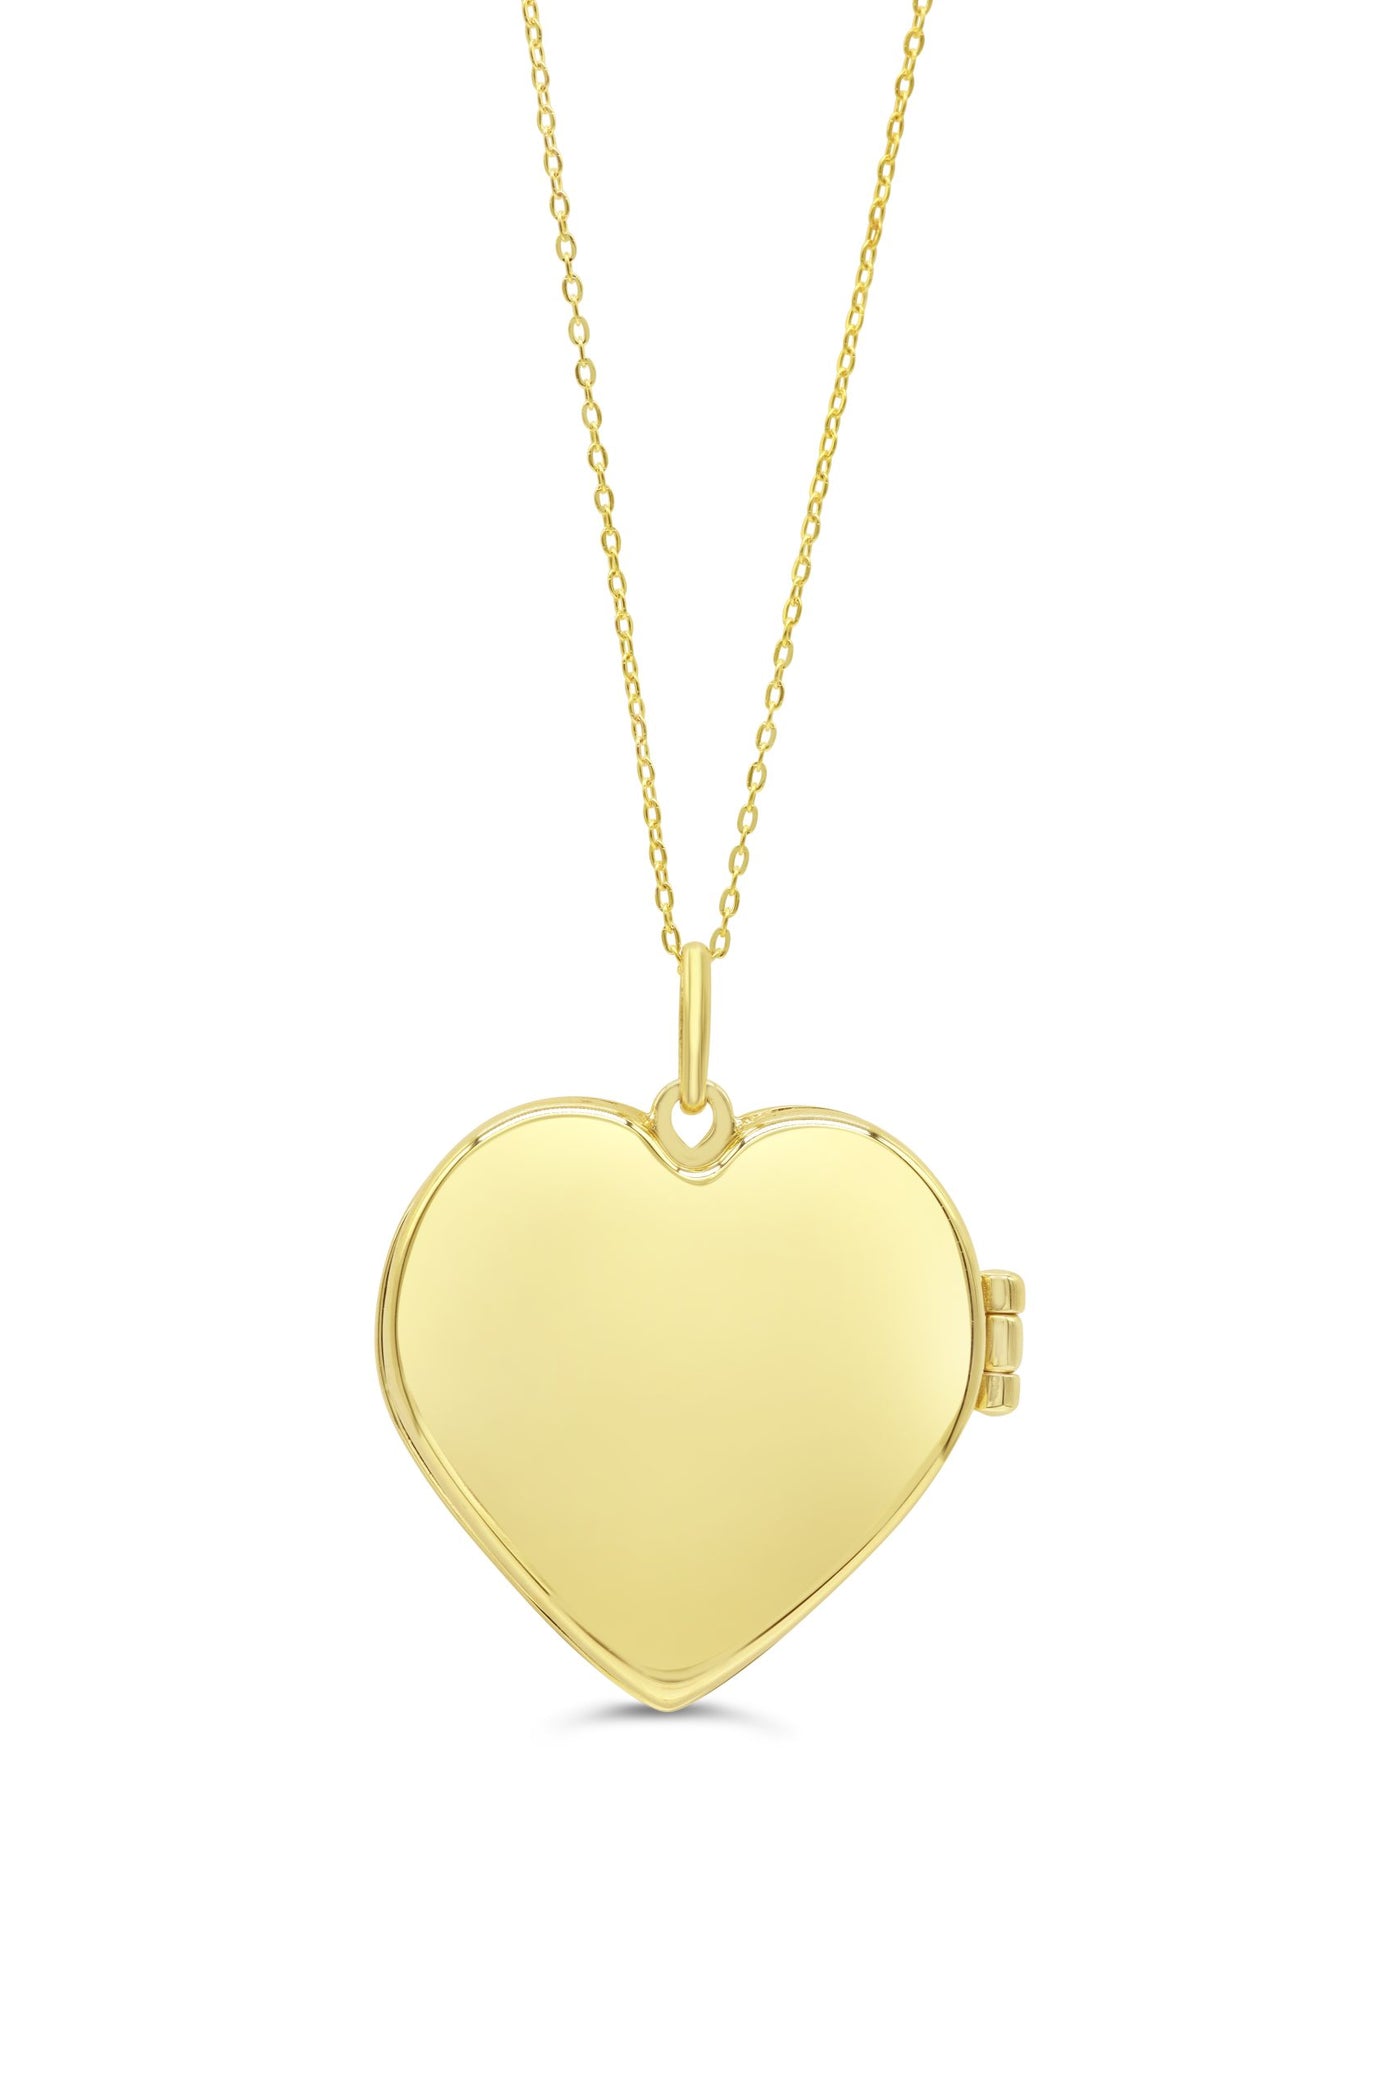 10 Karat Yellow Gold Large Heart Locket Necklace